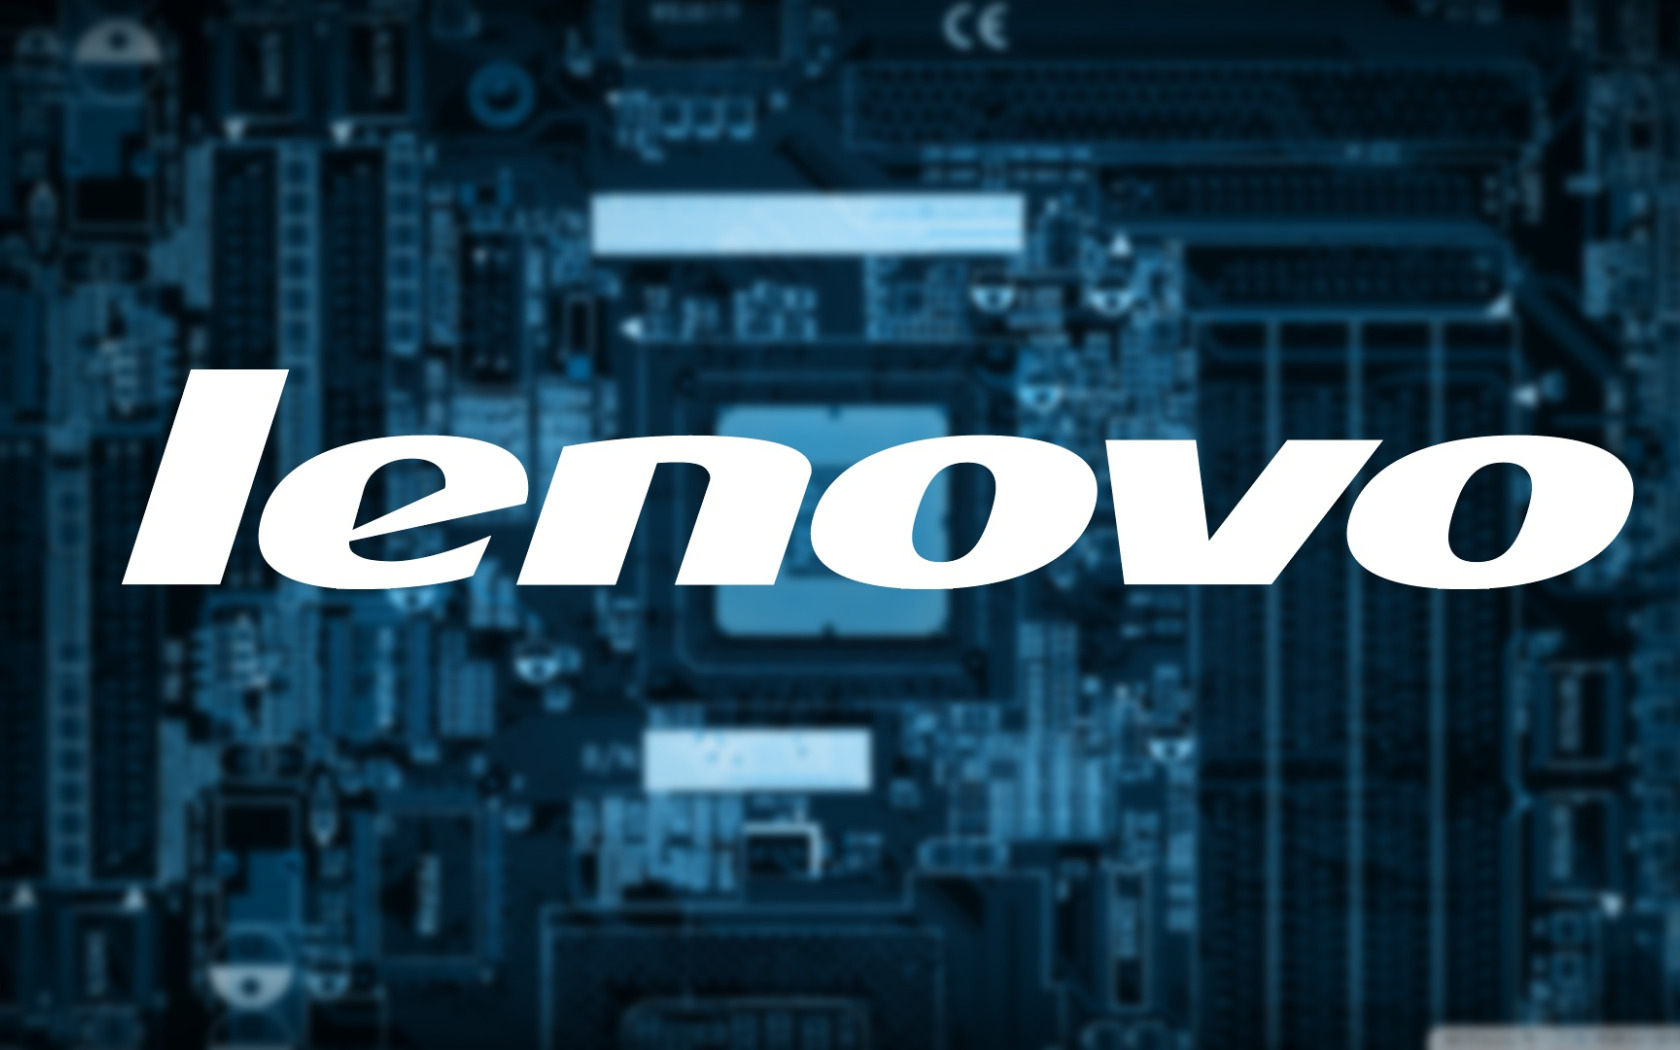 Lenovo wallpaper. Lenovo. Заставка леново. Обои на рабочий стол Lenovo. Заставка леново на рабочий стол.